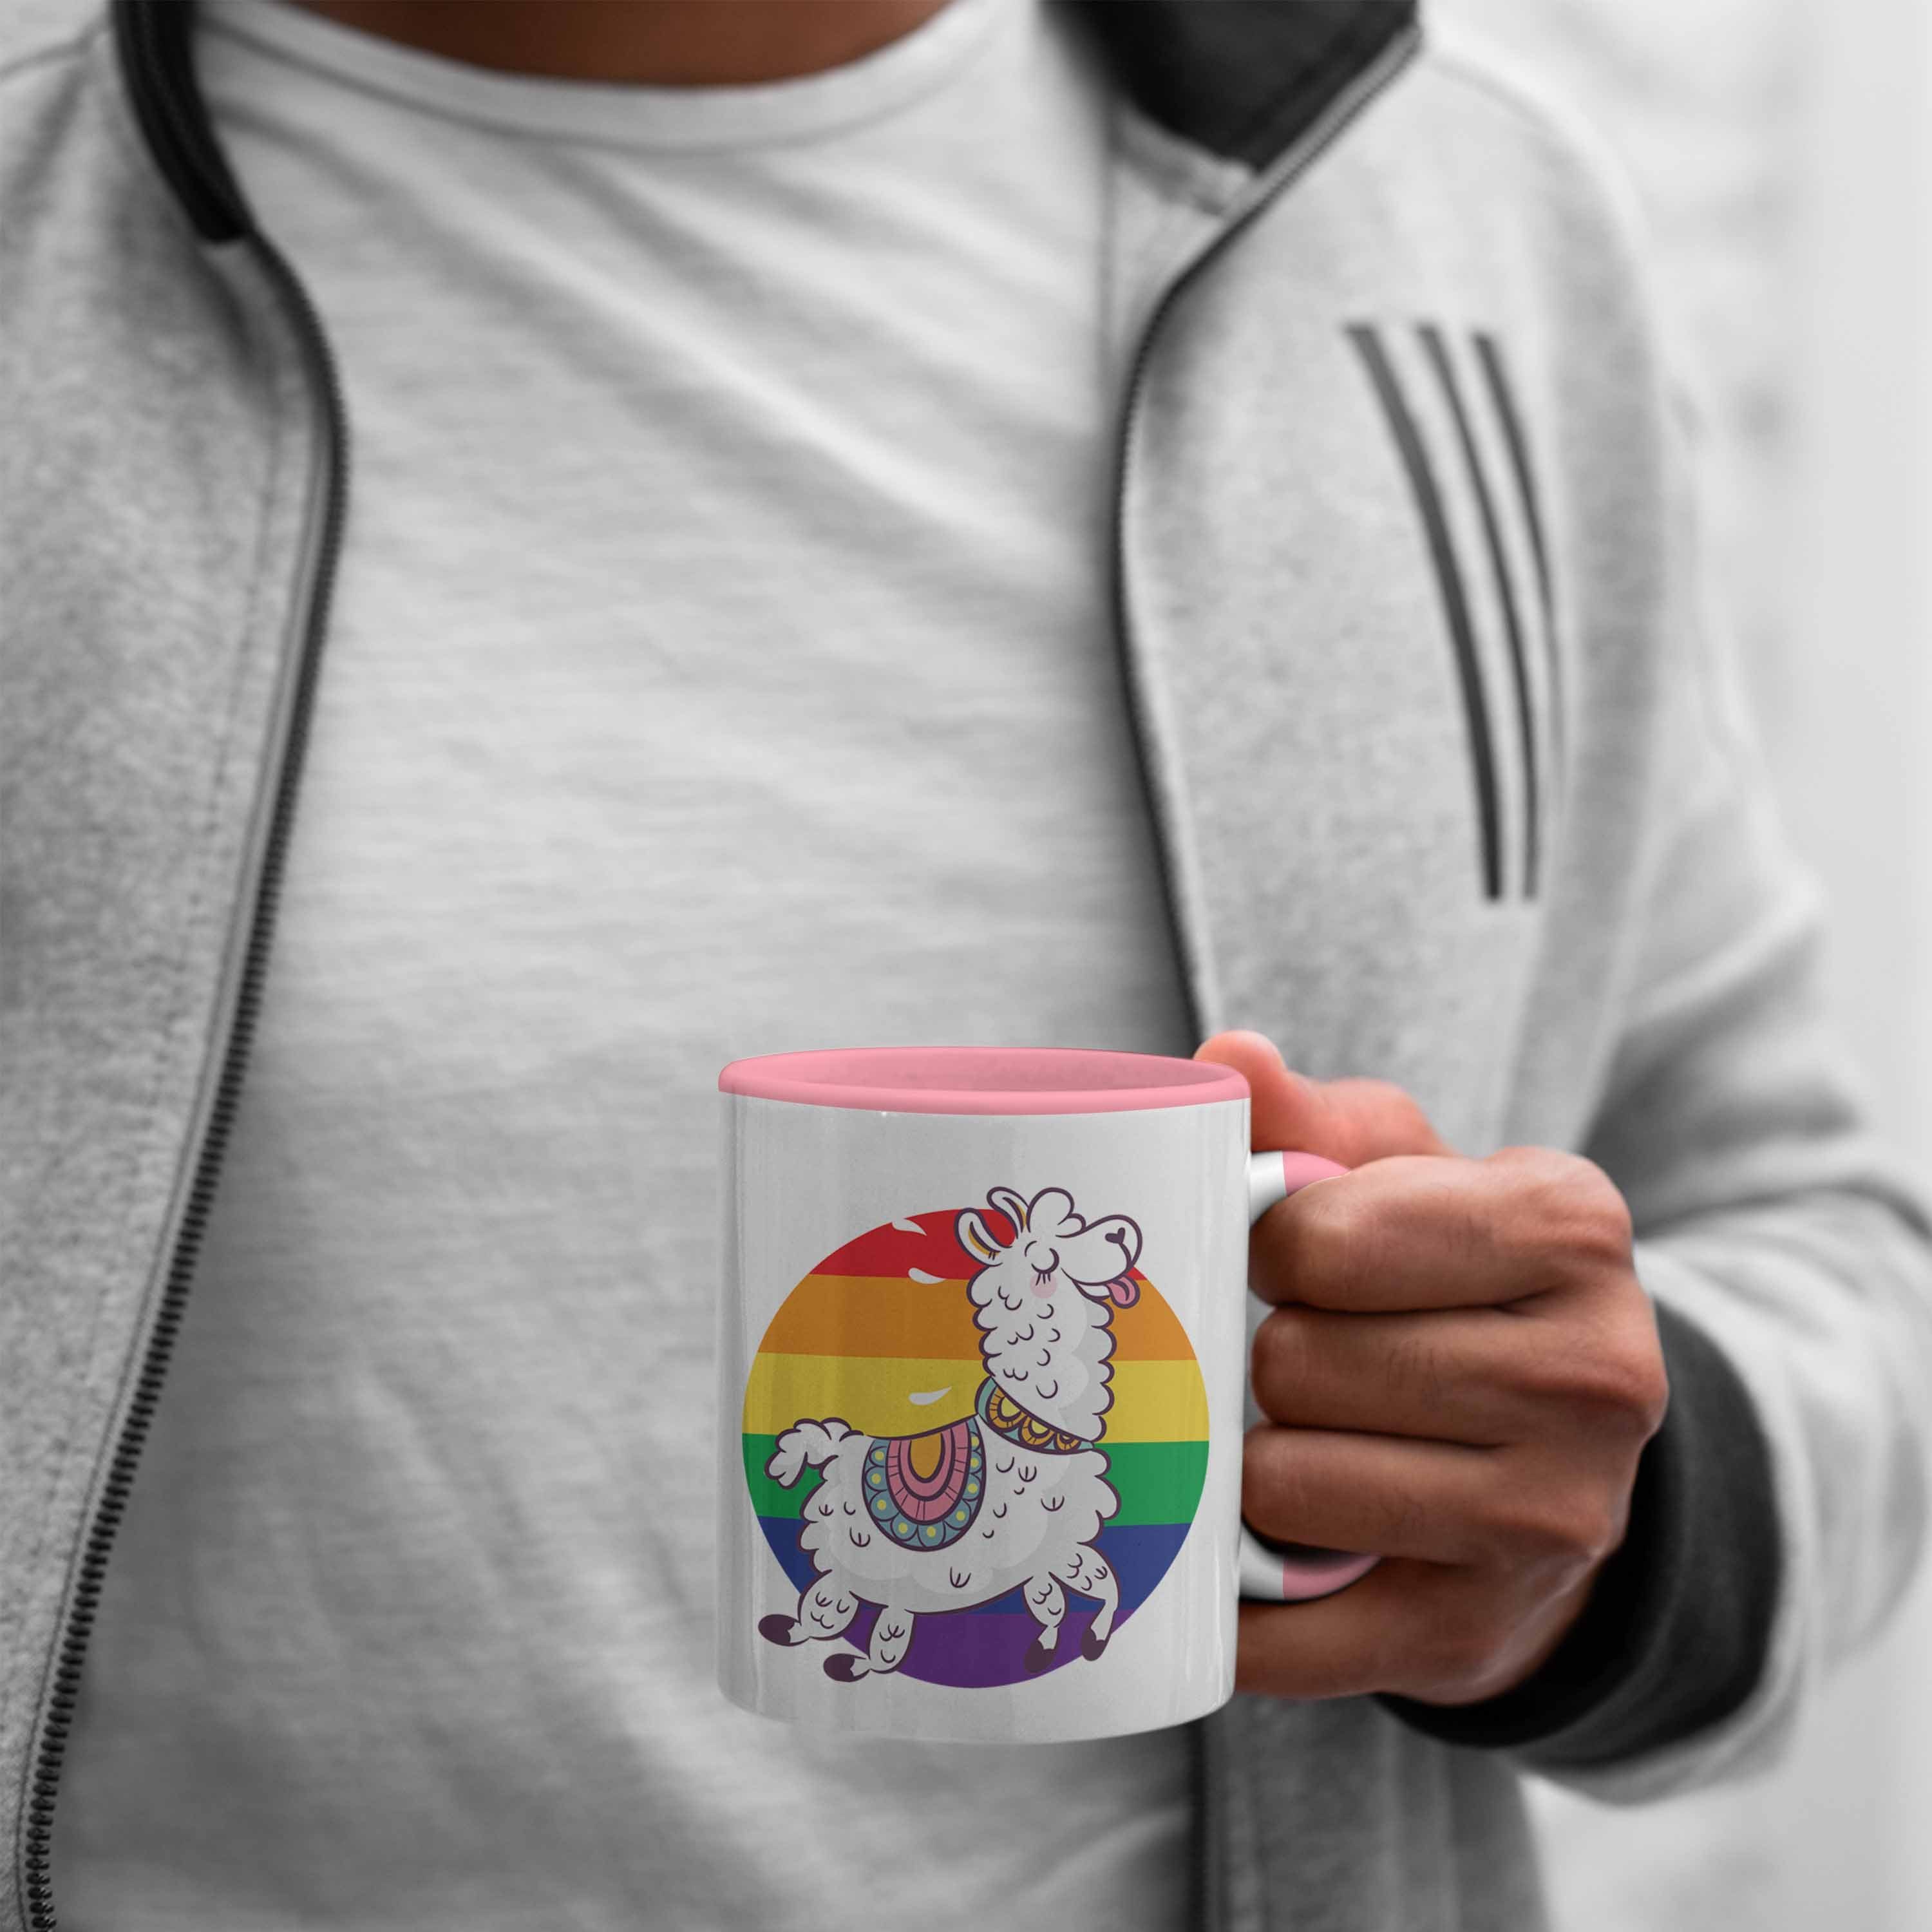 Trendation Tasse Trendation - Regenbogen Geschenk Schwule LGBT Lesben Llama Pride Tasse Rosa Grafik Transgender Tolles